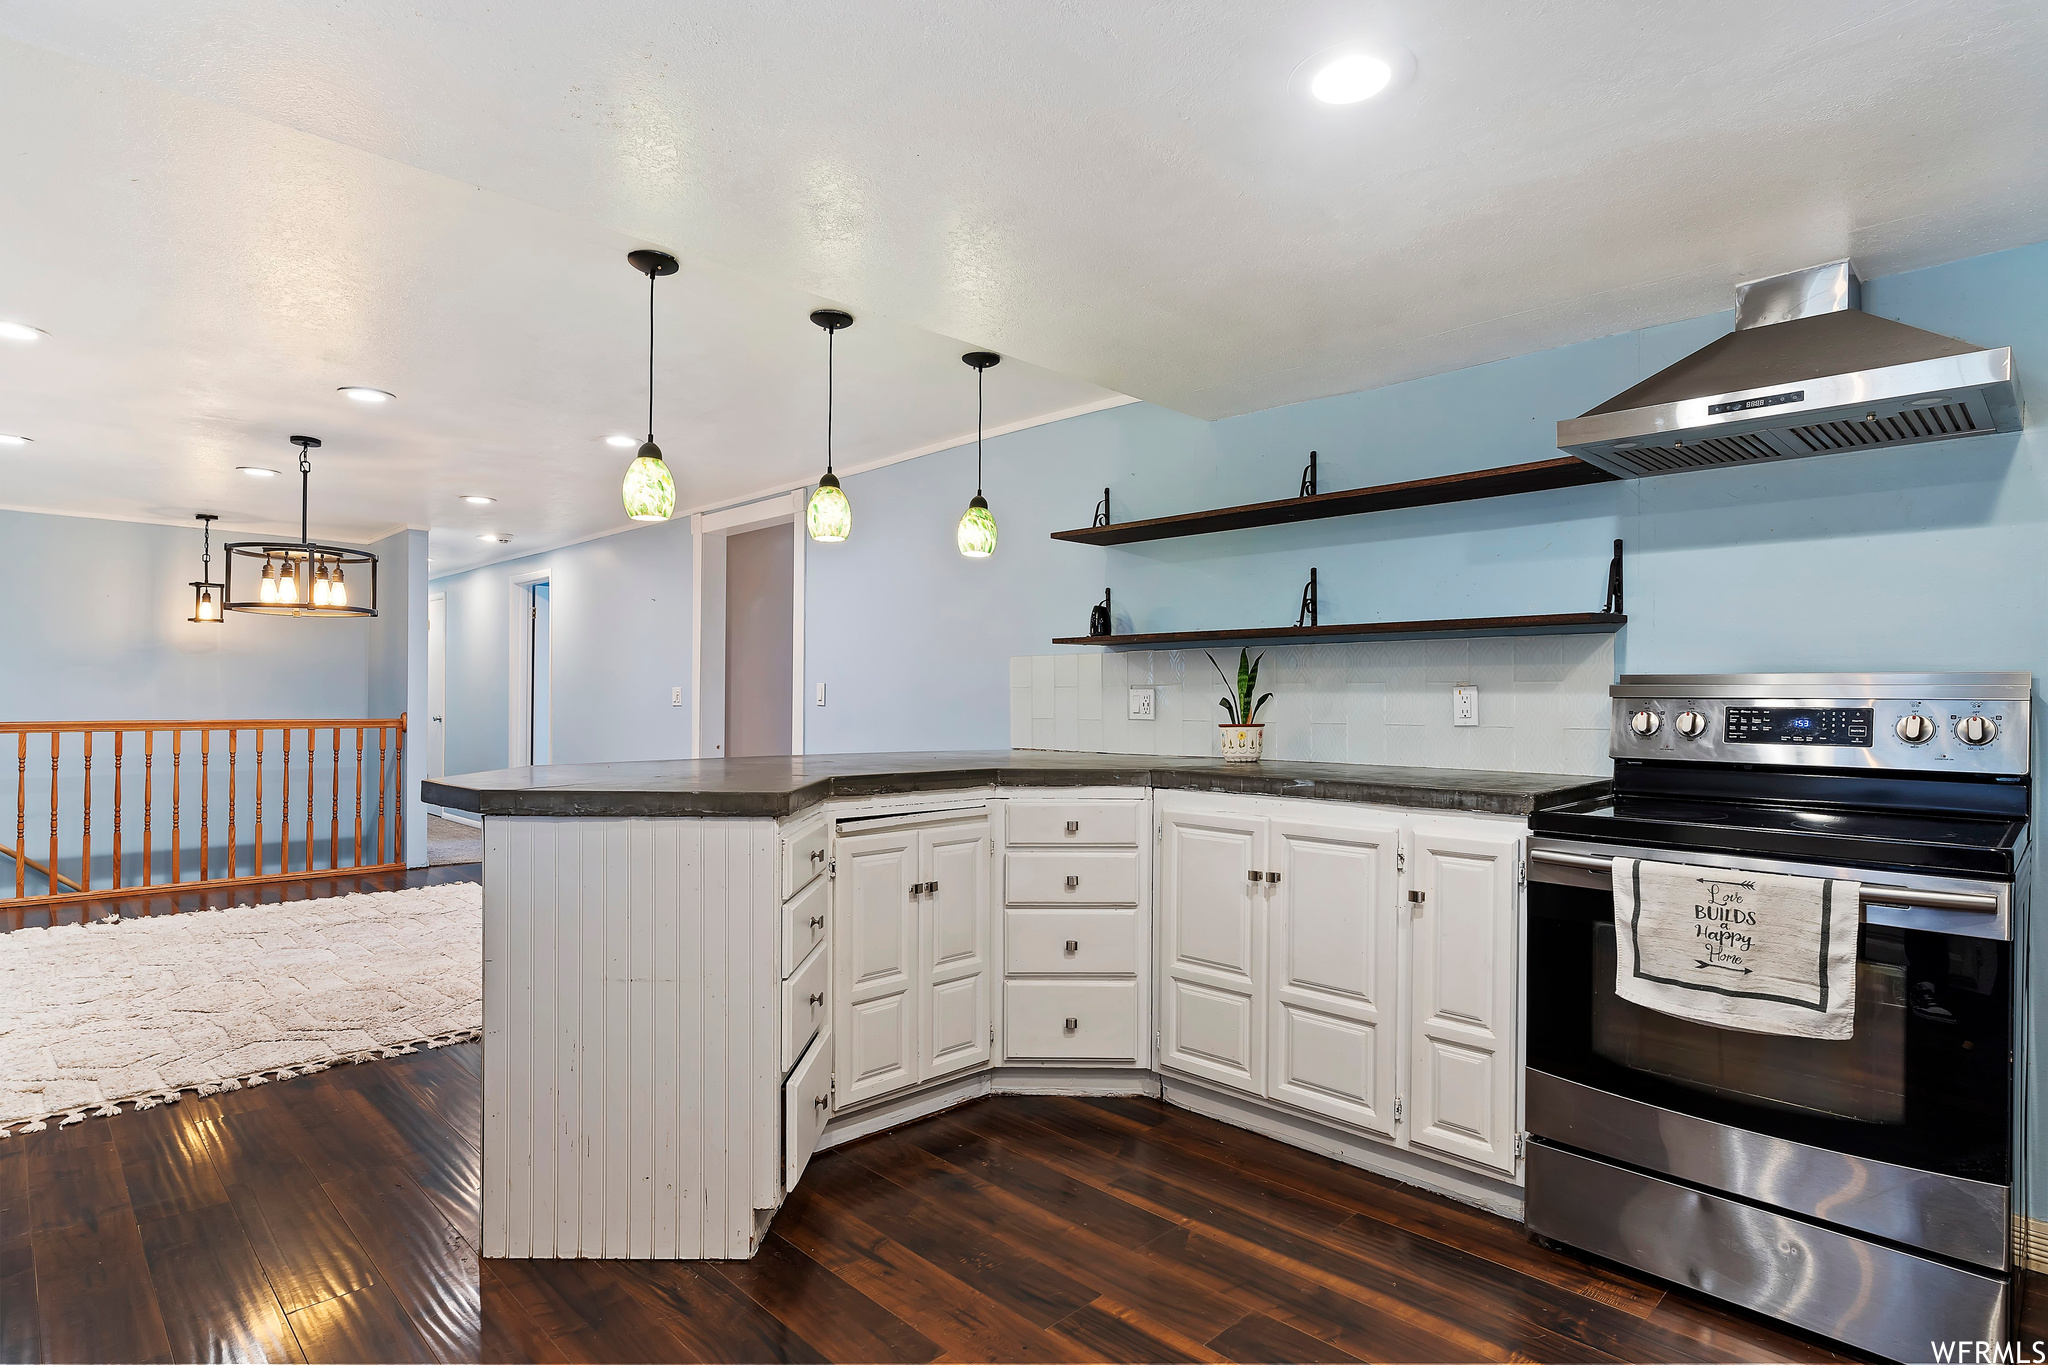 Kitchen with wall chimney range hood, white cabinetry, stainless steel electric range, dark hardwood / wood-style floors, and backsplash